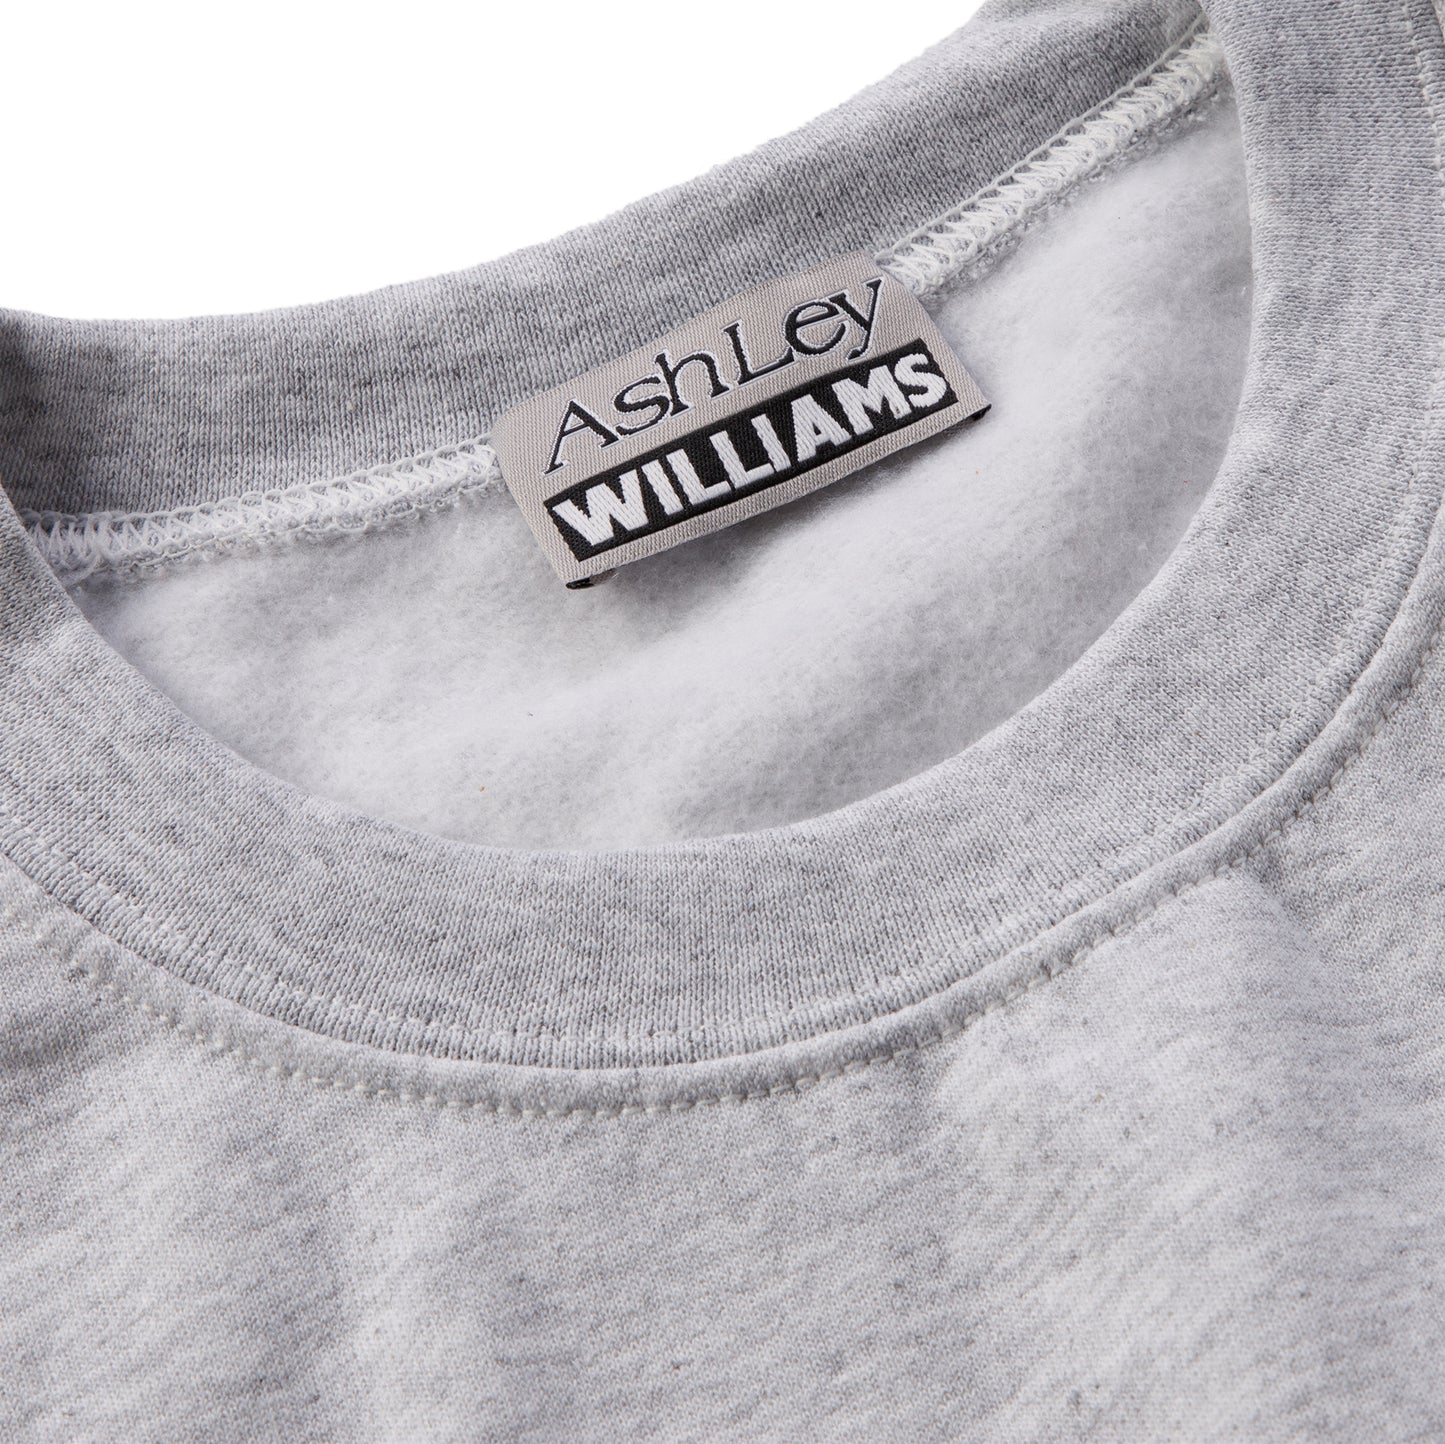 Ashley Williams Dog Years Sweatshirt (White)